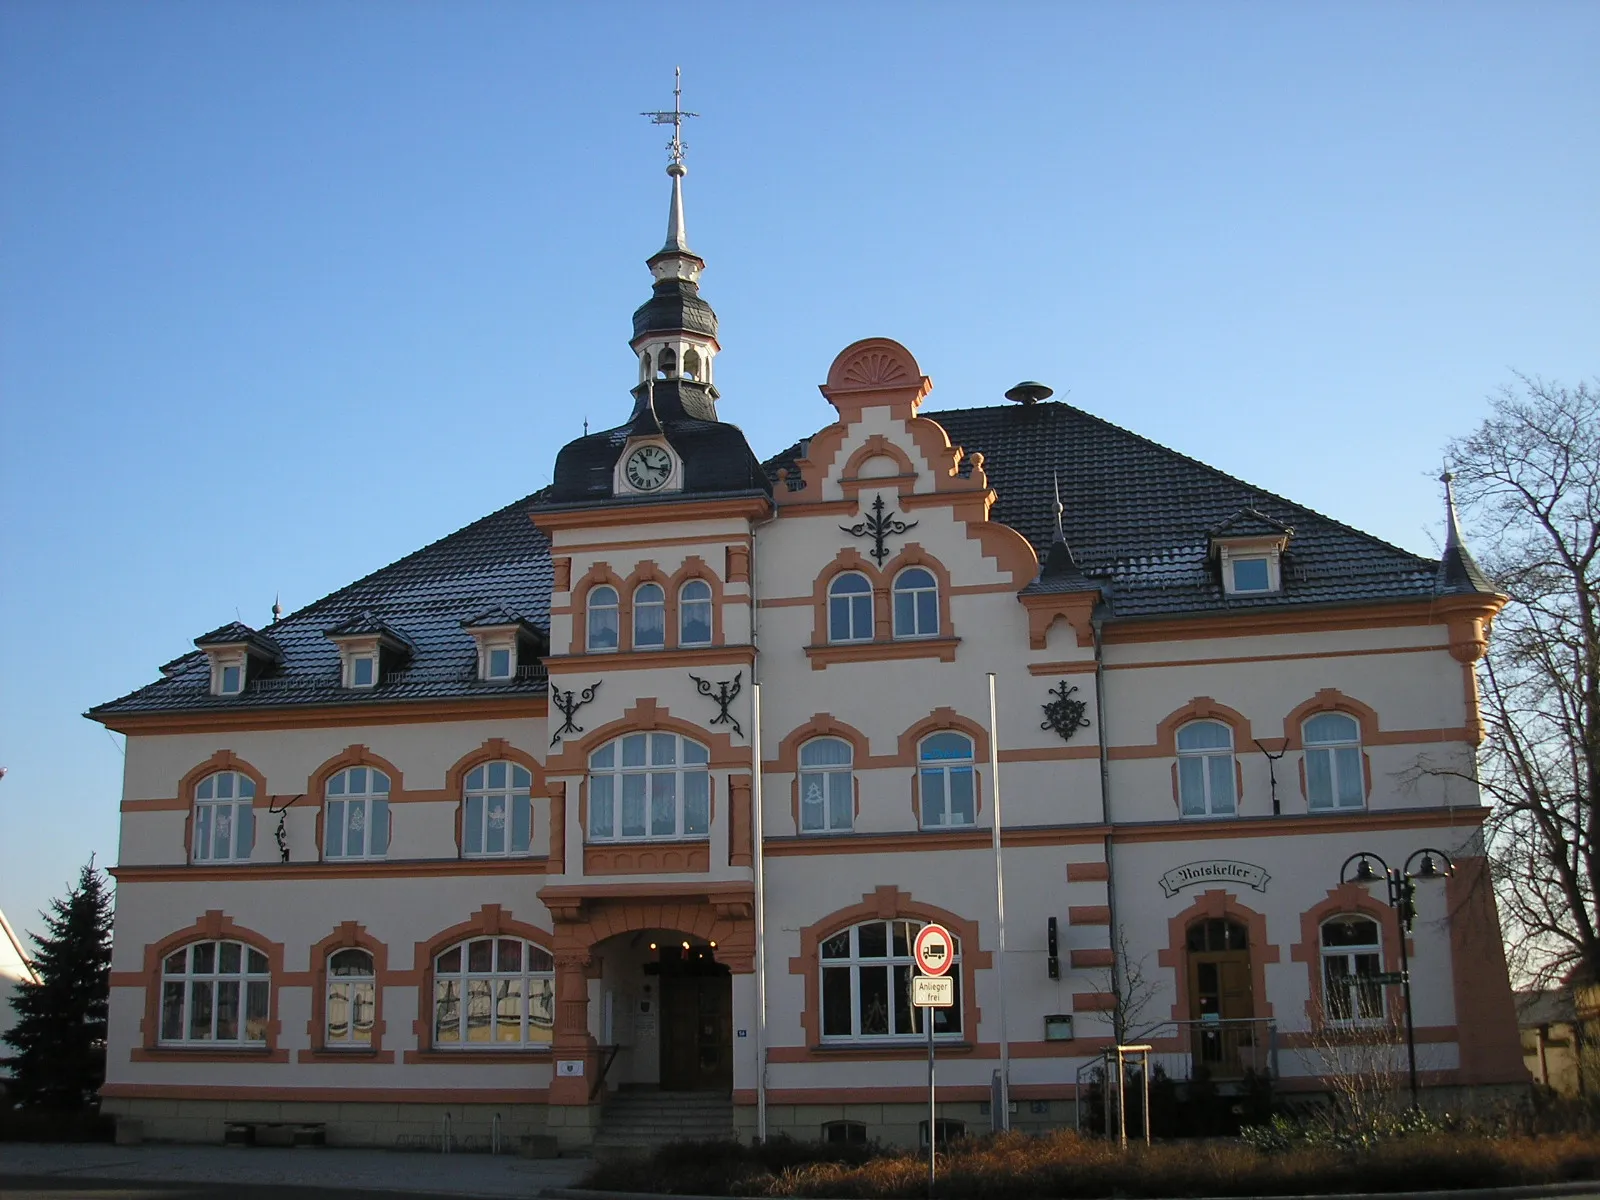 Image of Hermsdorf